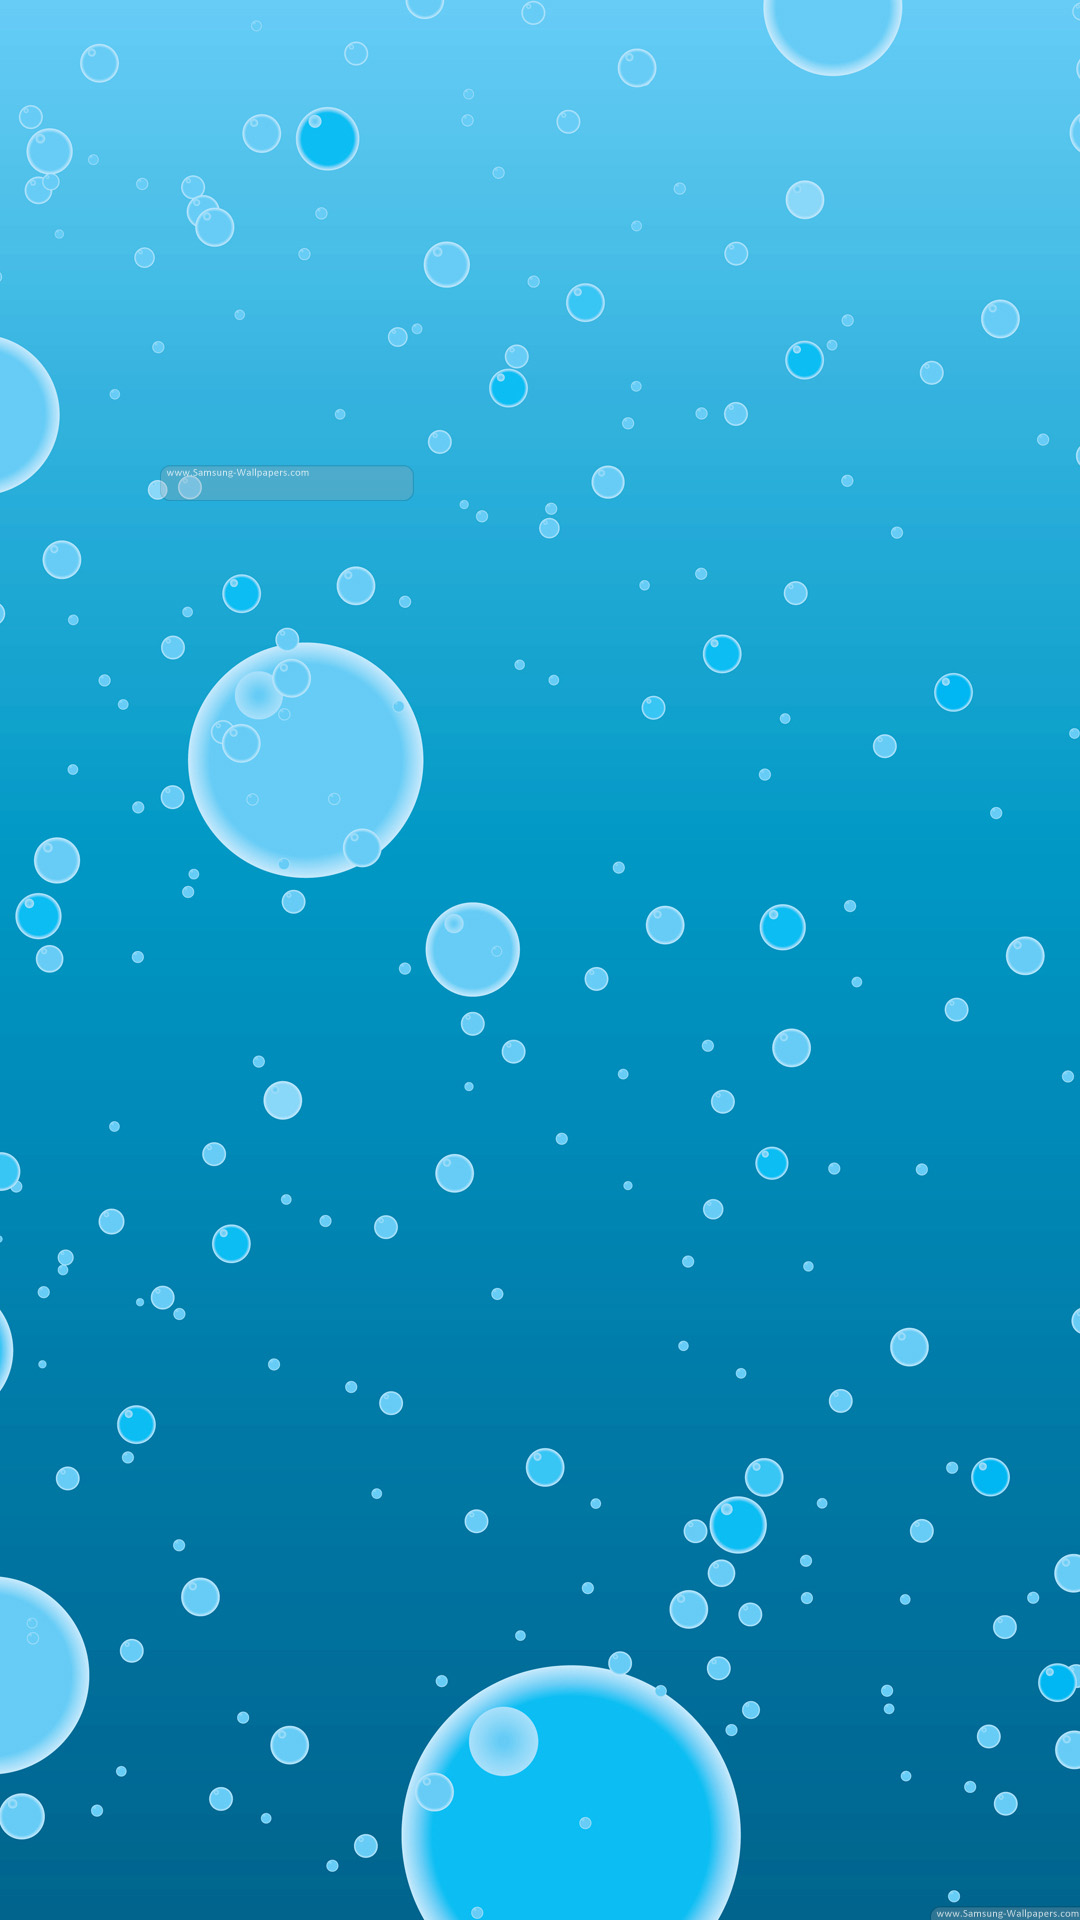 Water Bubbles Illustration iPhone Plus HD Wallpaper iPod Wallpaper